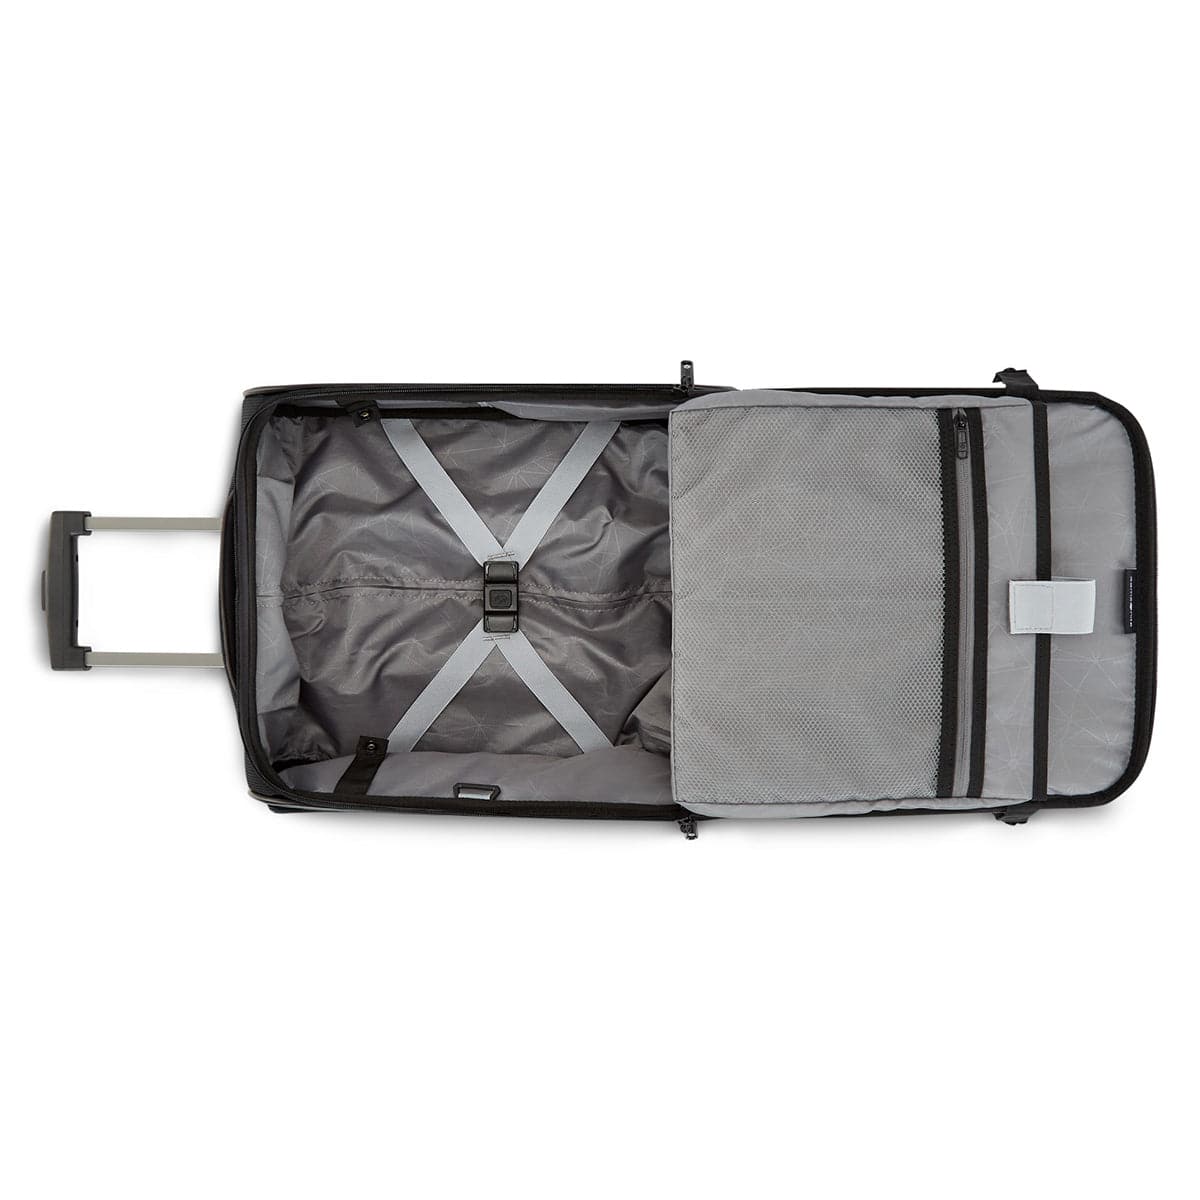 Samsonite Ascella 3.0 Wheeled Underseater Luggage